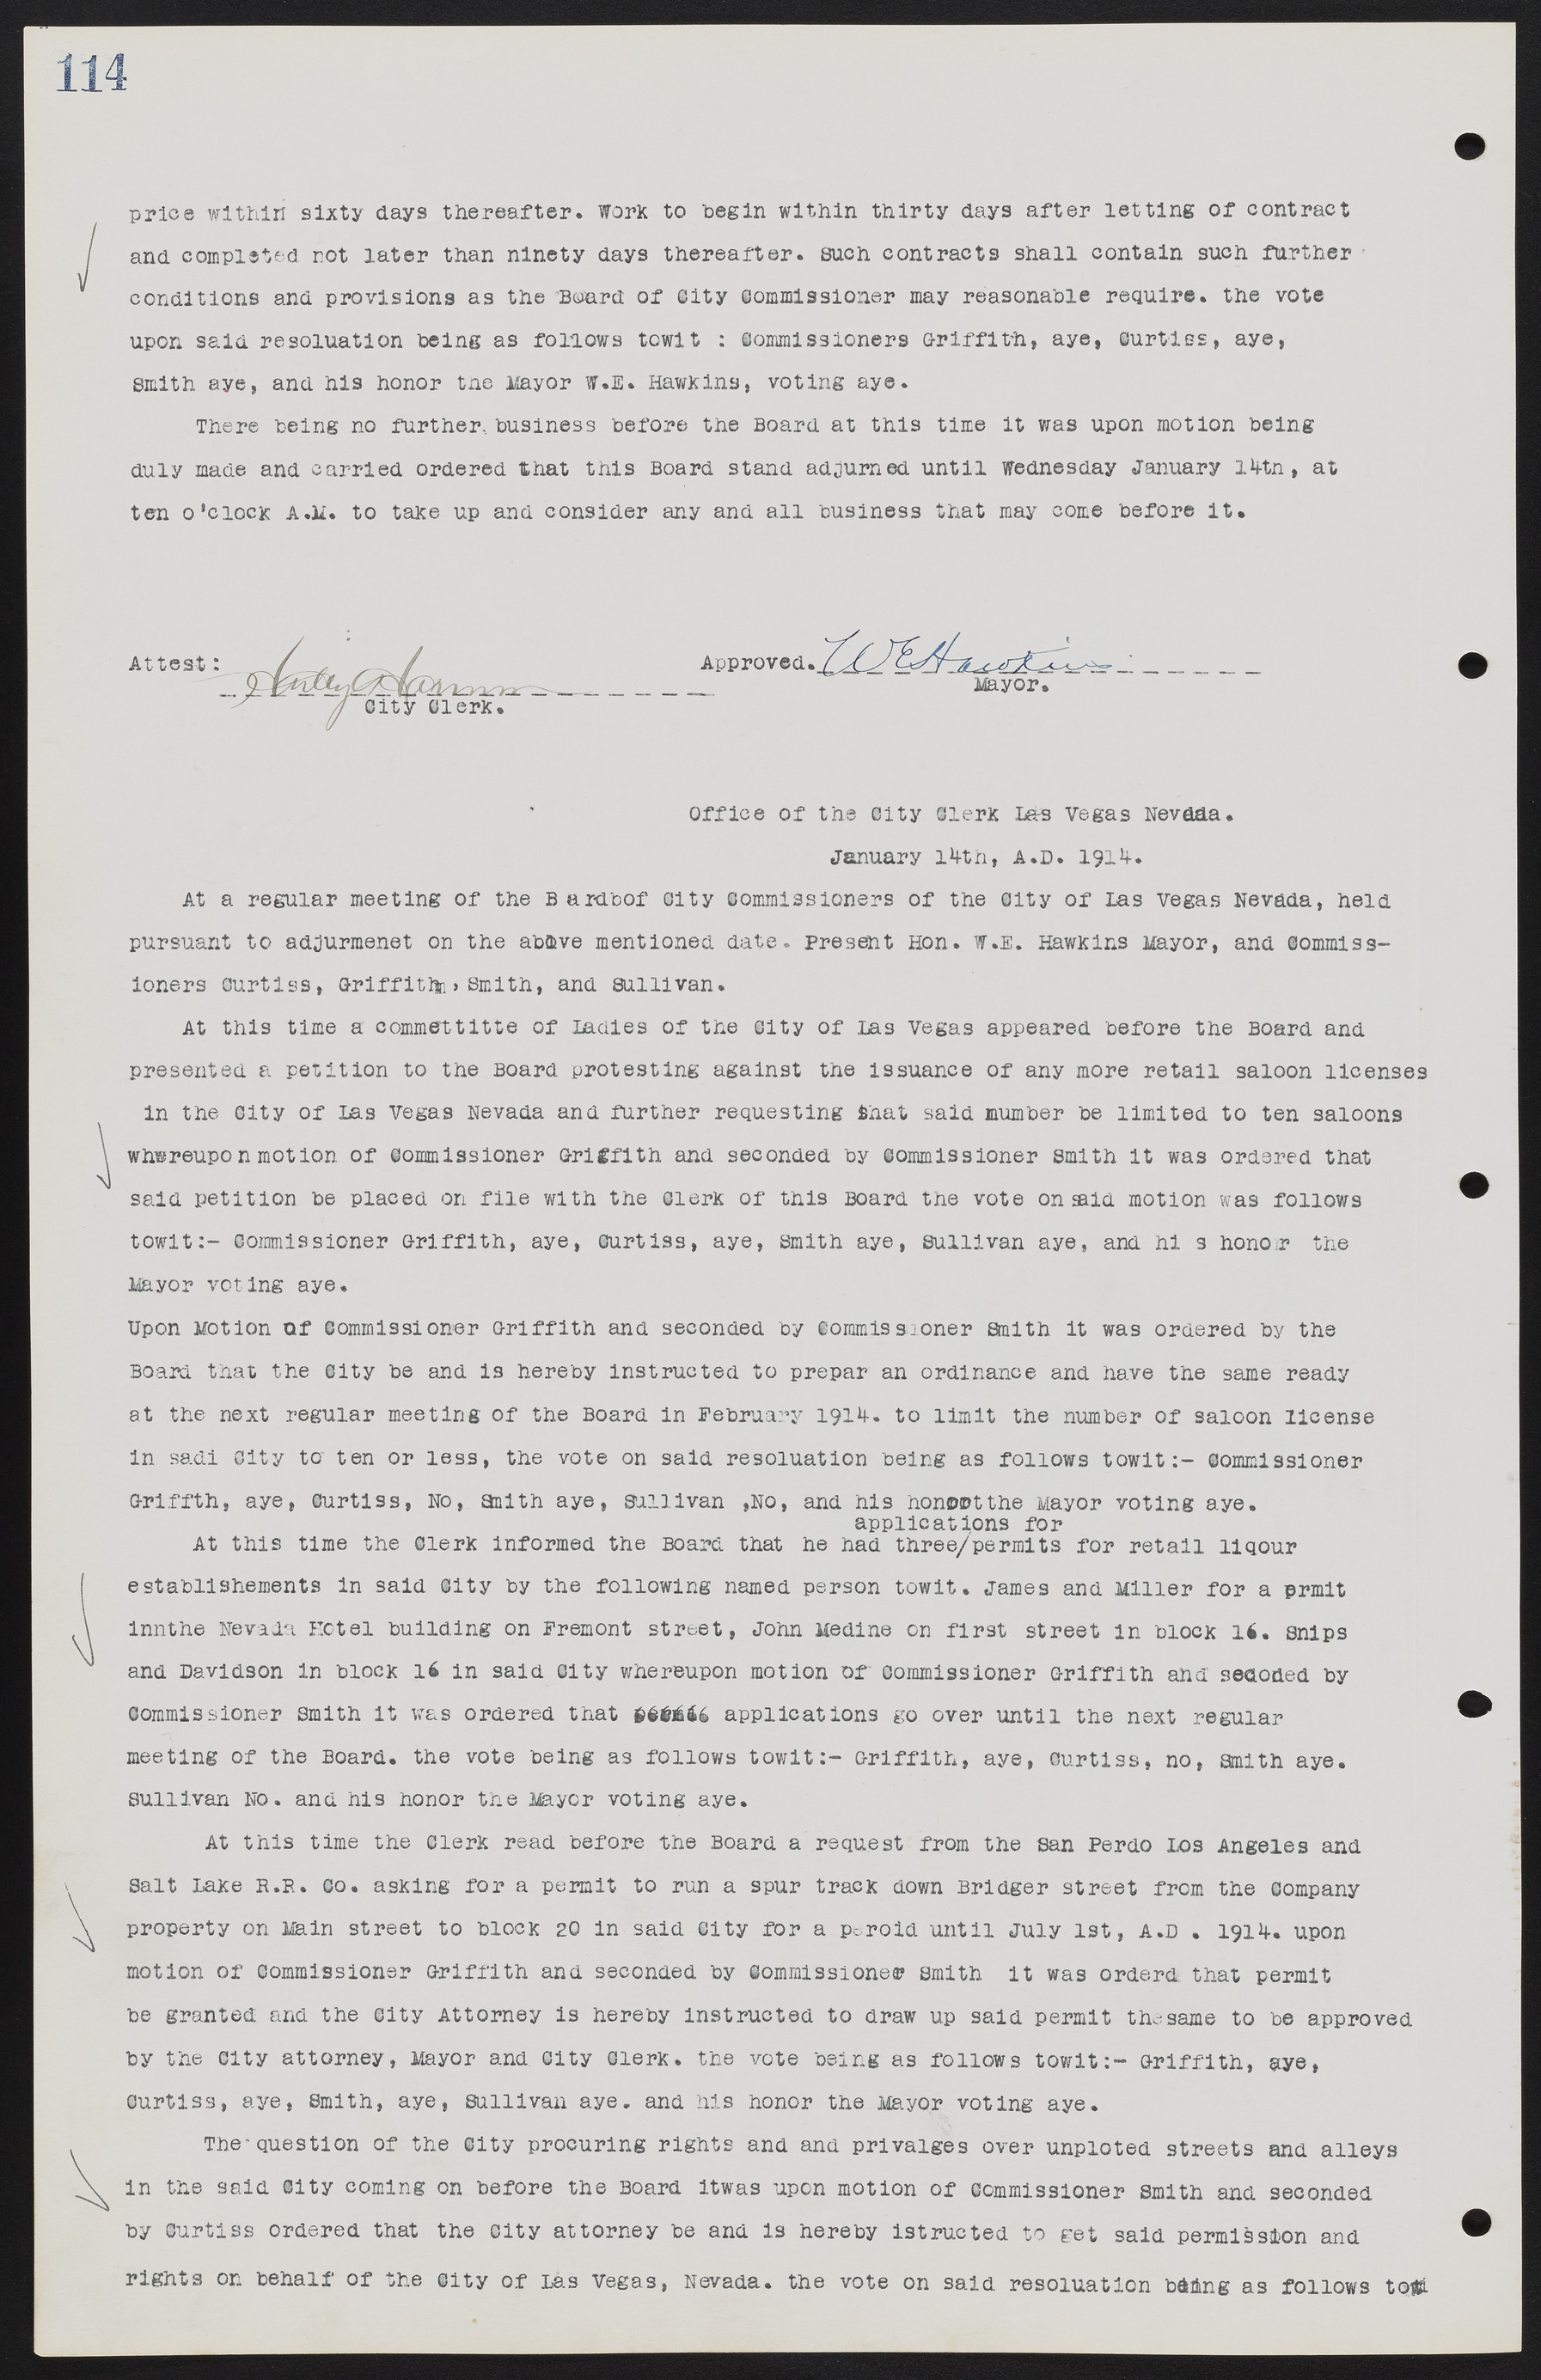 Las Vegas City Commission Minutes, June 22, 1911 to February 7, 1922, lvc000001-128